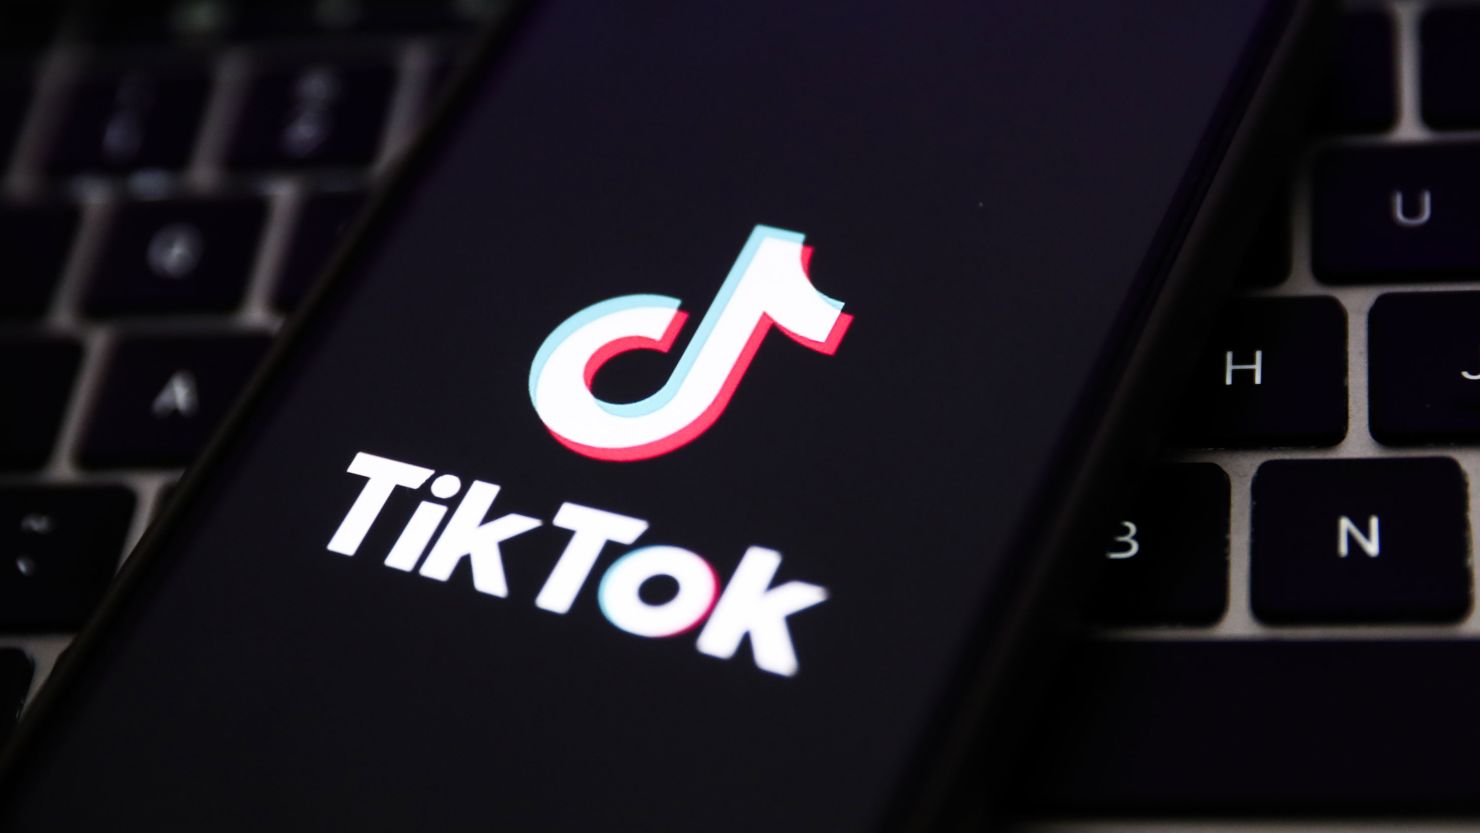 TikTok says it now has over 170 million users in the United States. (Photo by Jakub Porzycki/NurPhoto via Getty Images)